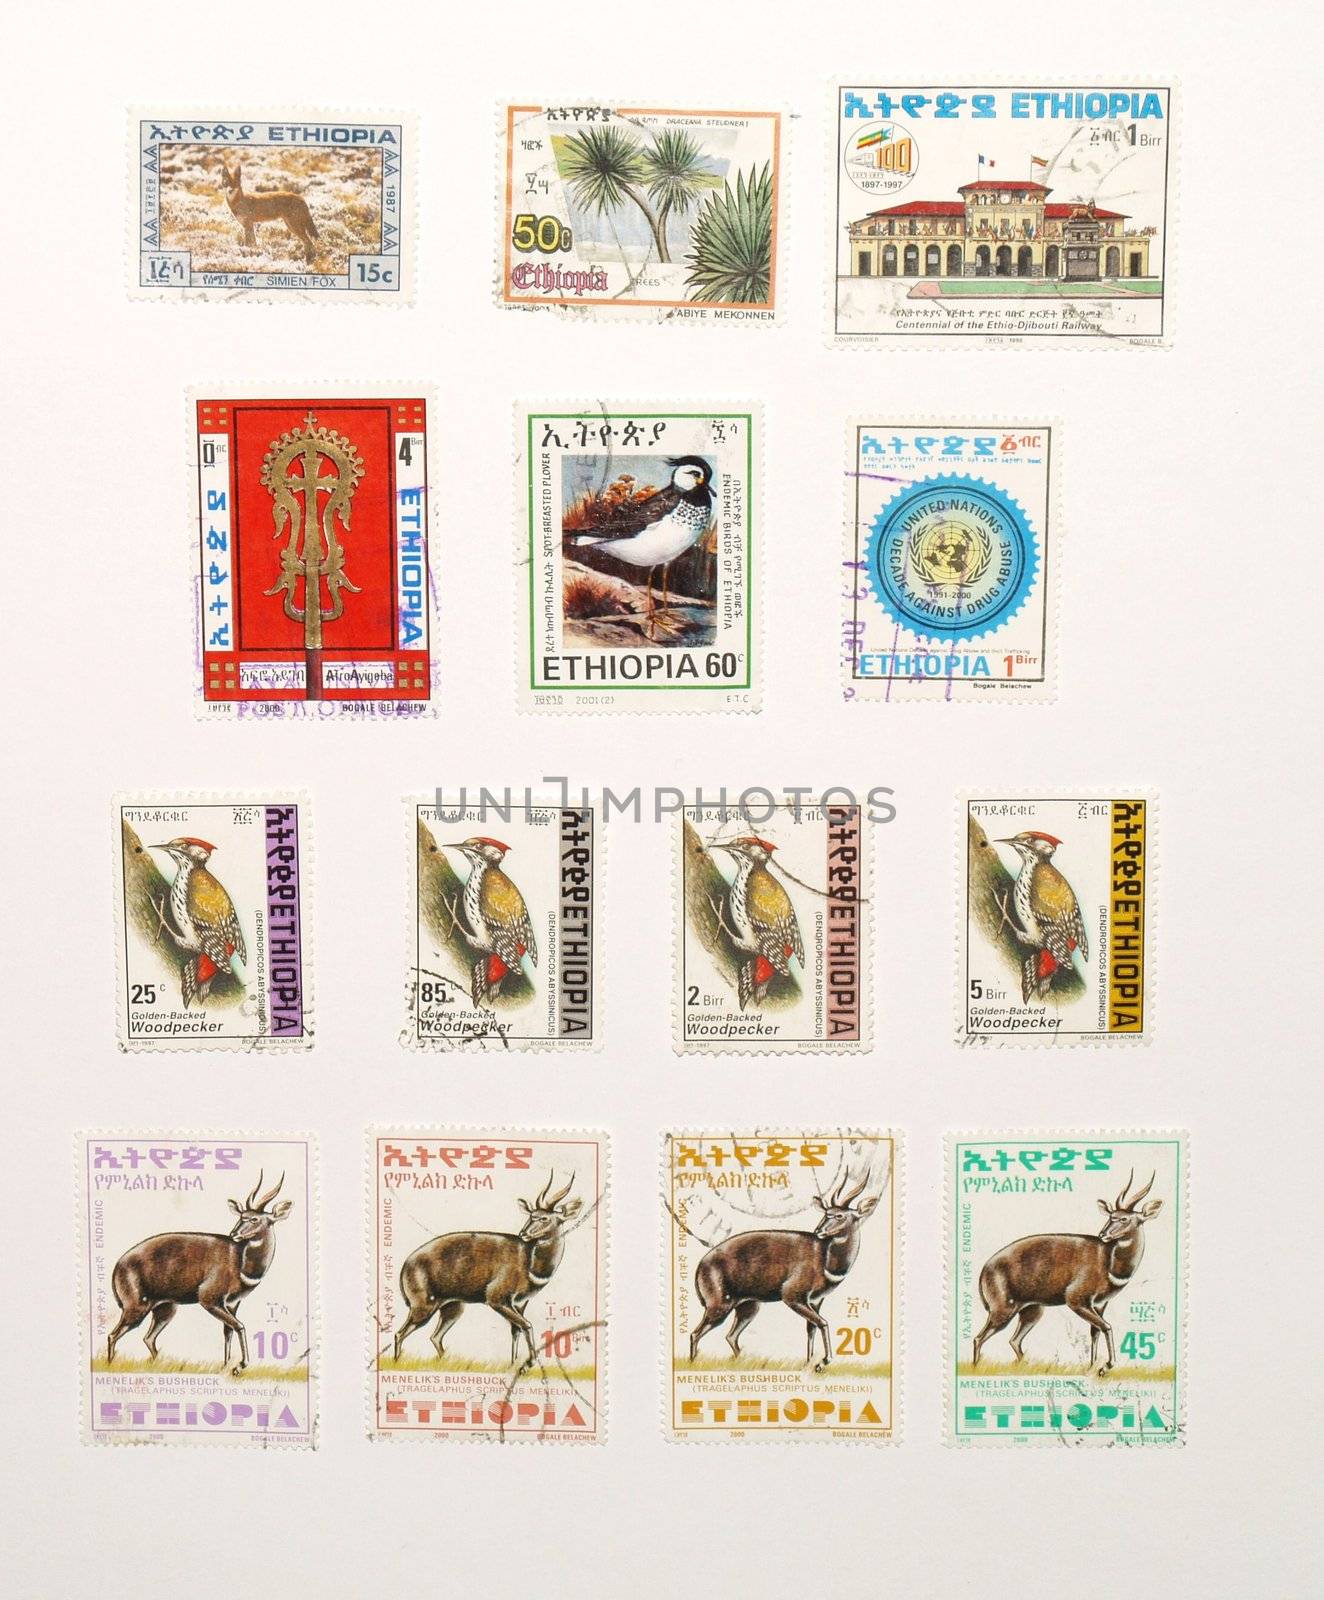 Ethiopian stamps